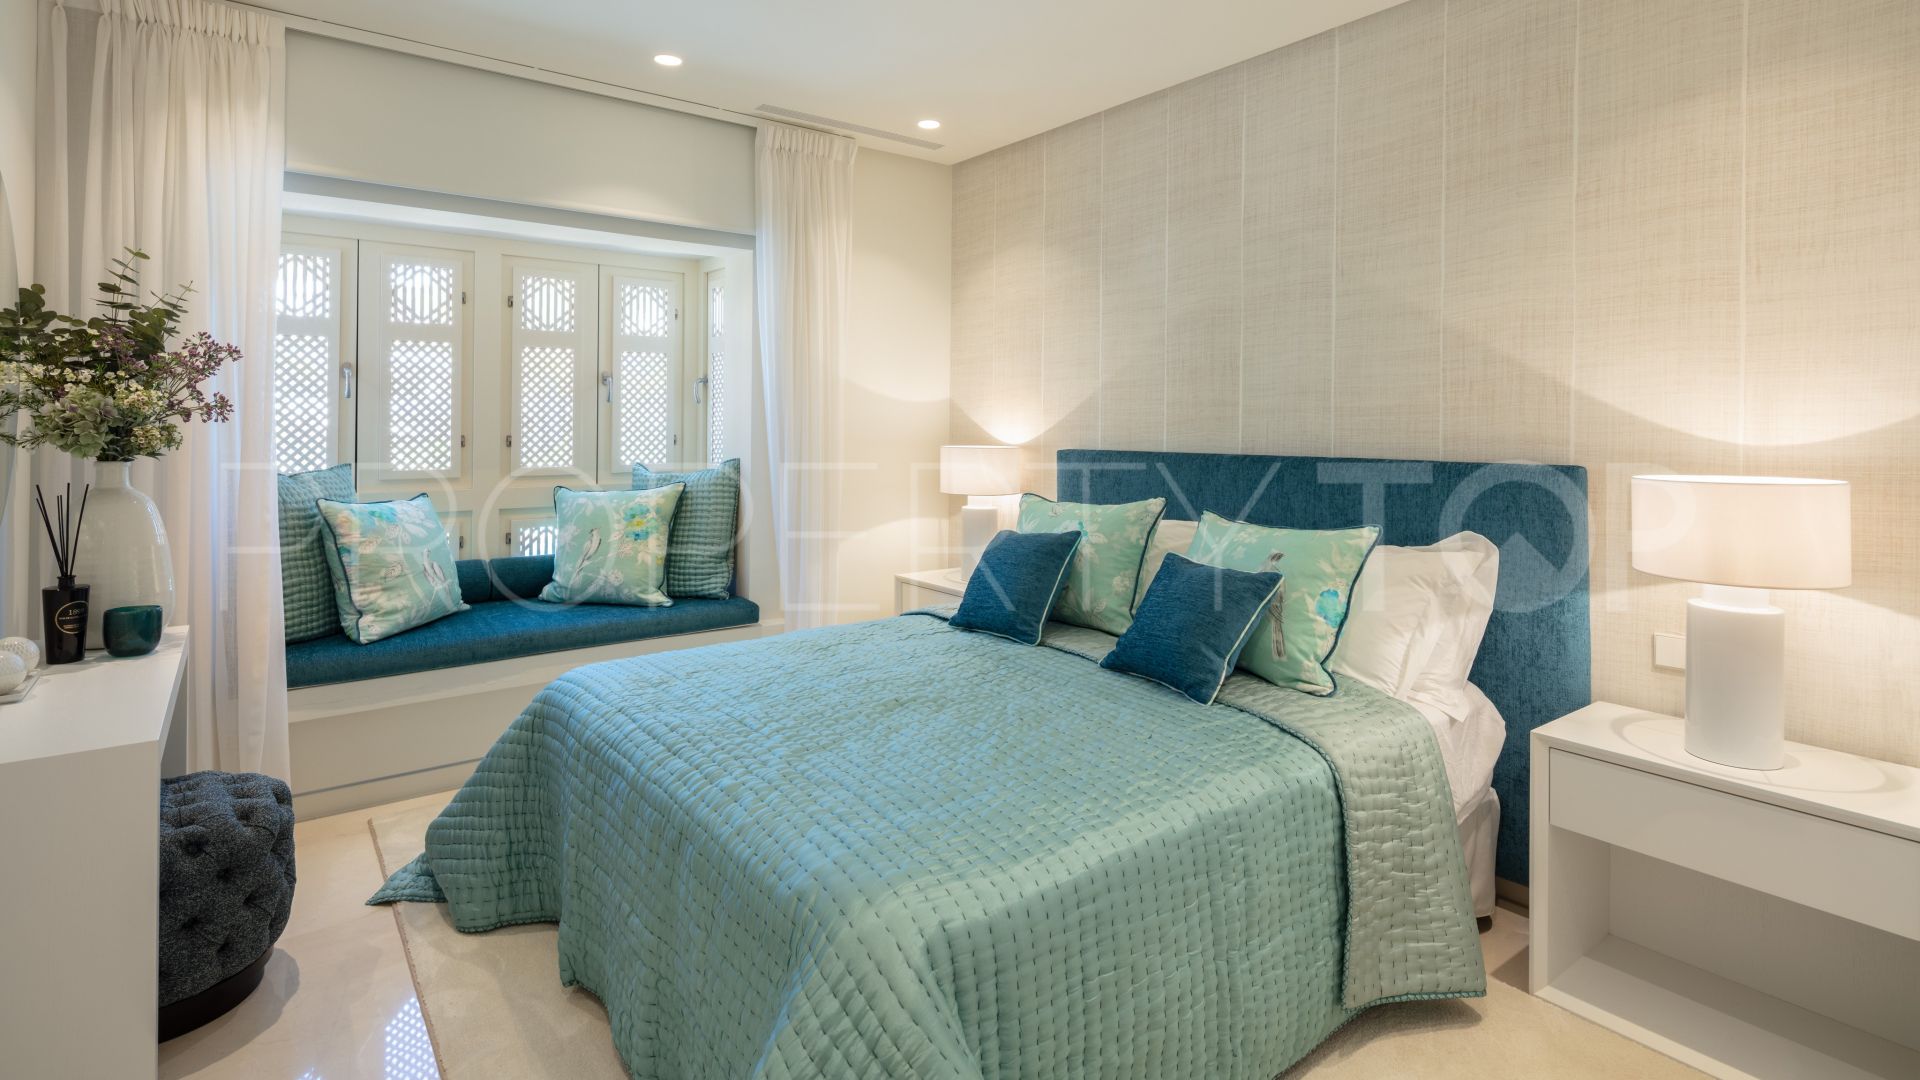 6 bedrooms duplex penthouse for sale in Puente Romano